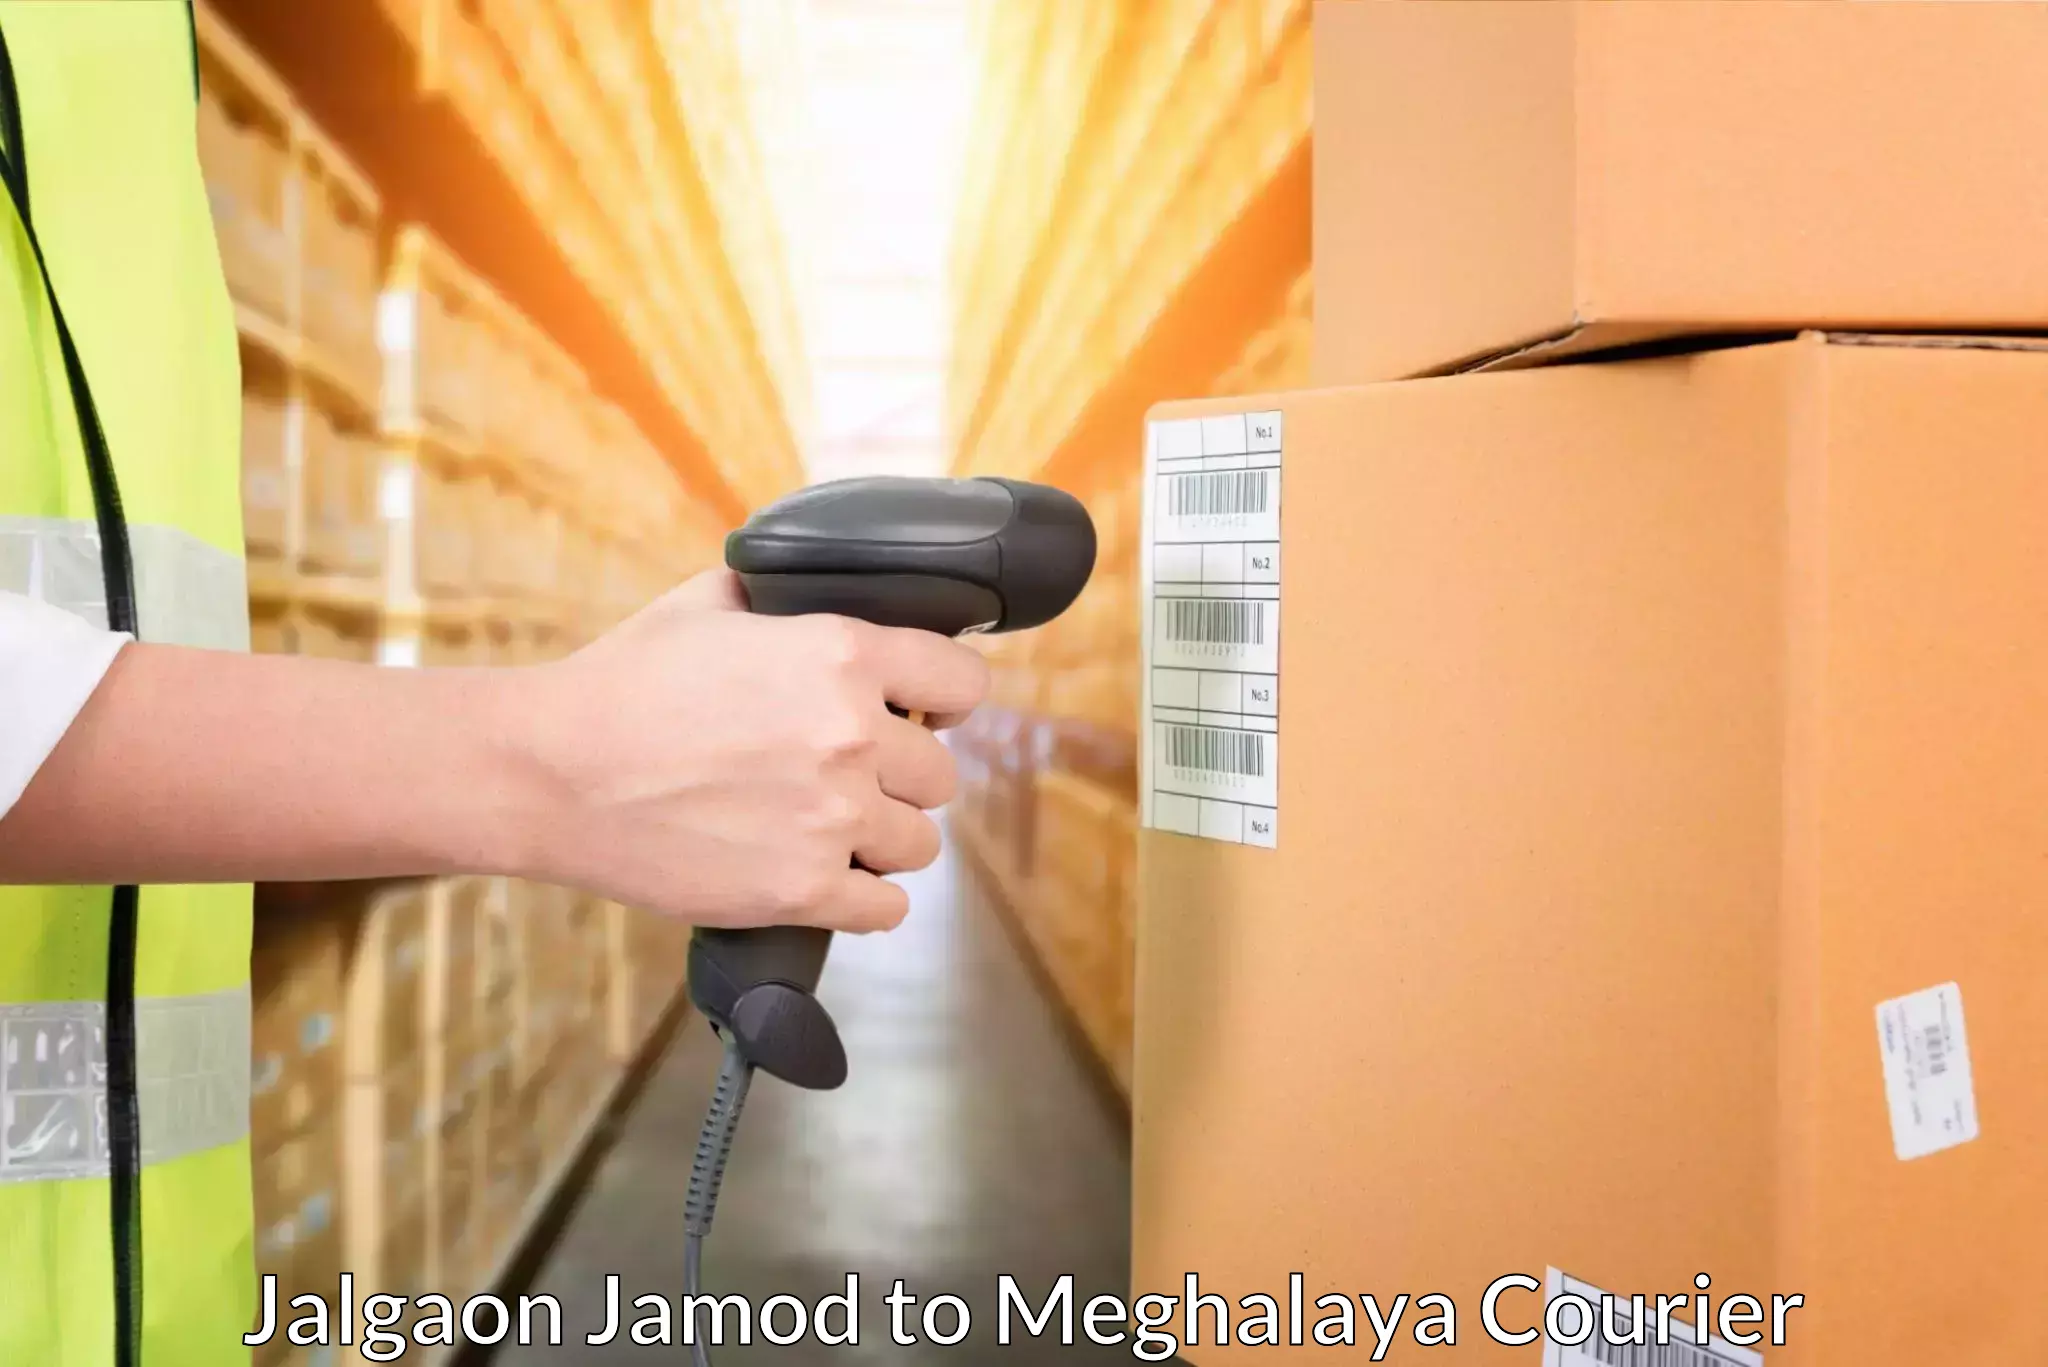 24/7 courier service in Jalgaon Jamod to Meghalaya